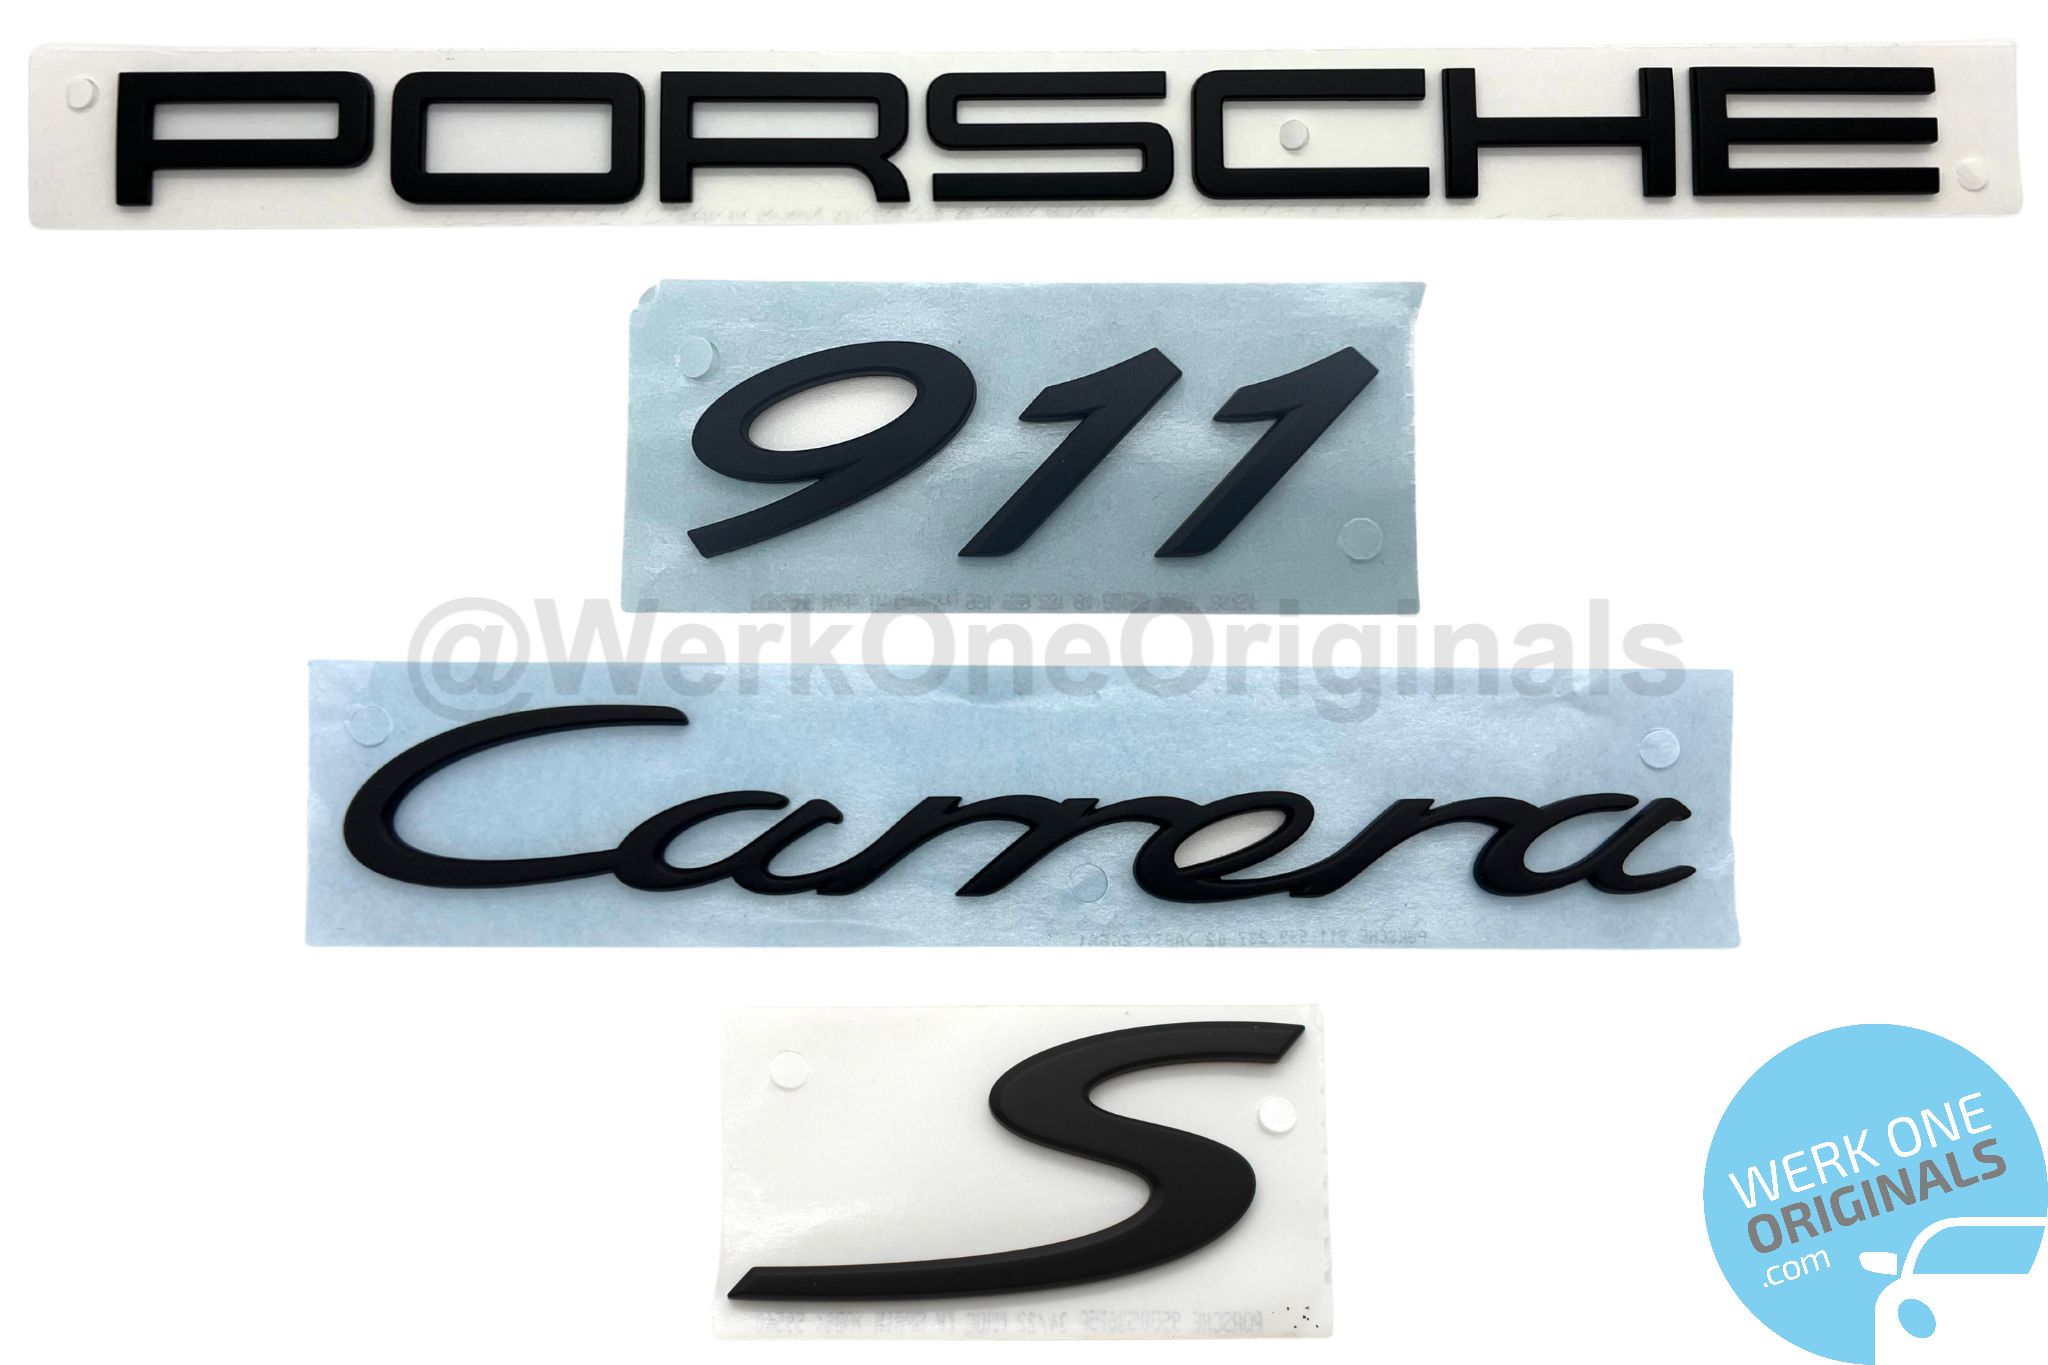 Porsche Official 'Porsche 911 Carrera S' Rear Badge Decal in Matte Black for 911 Type 991 Carrera S Models